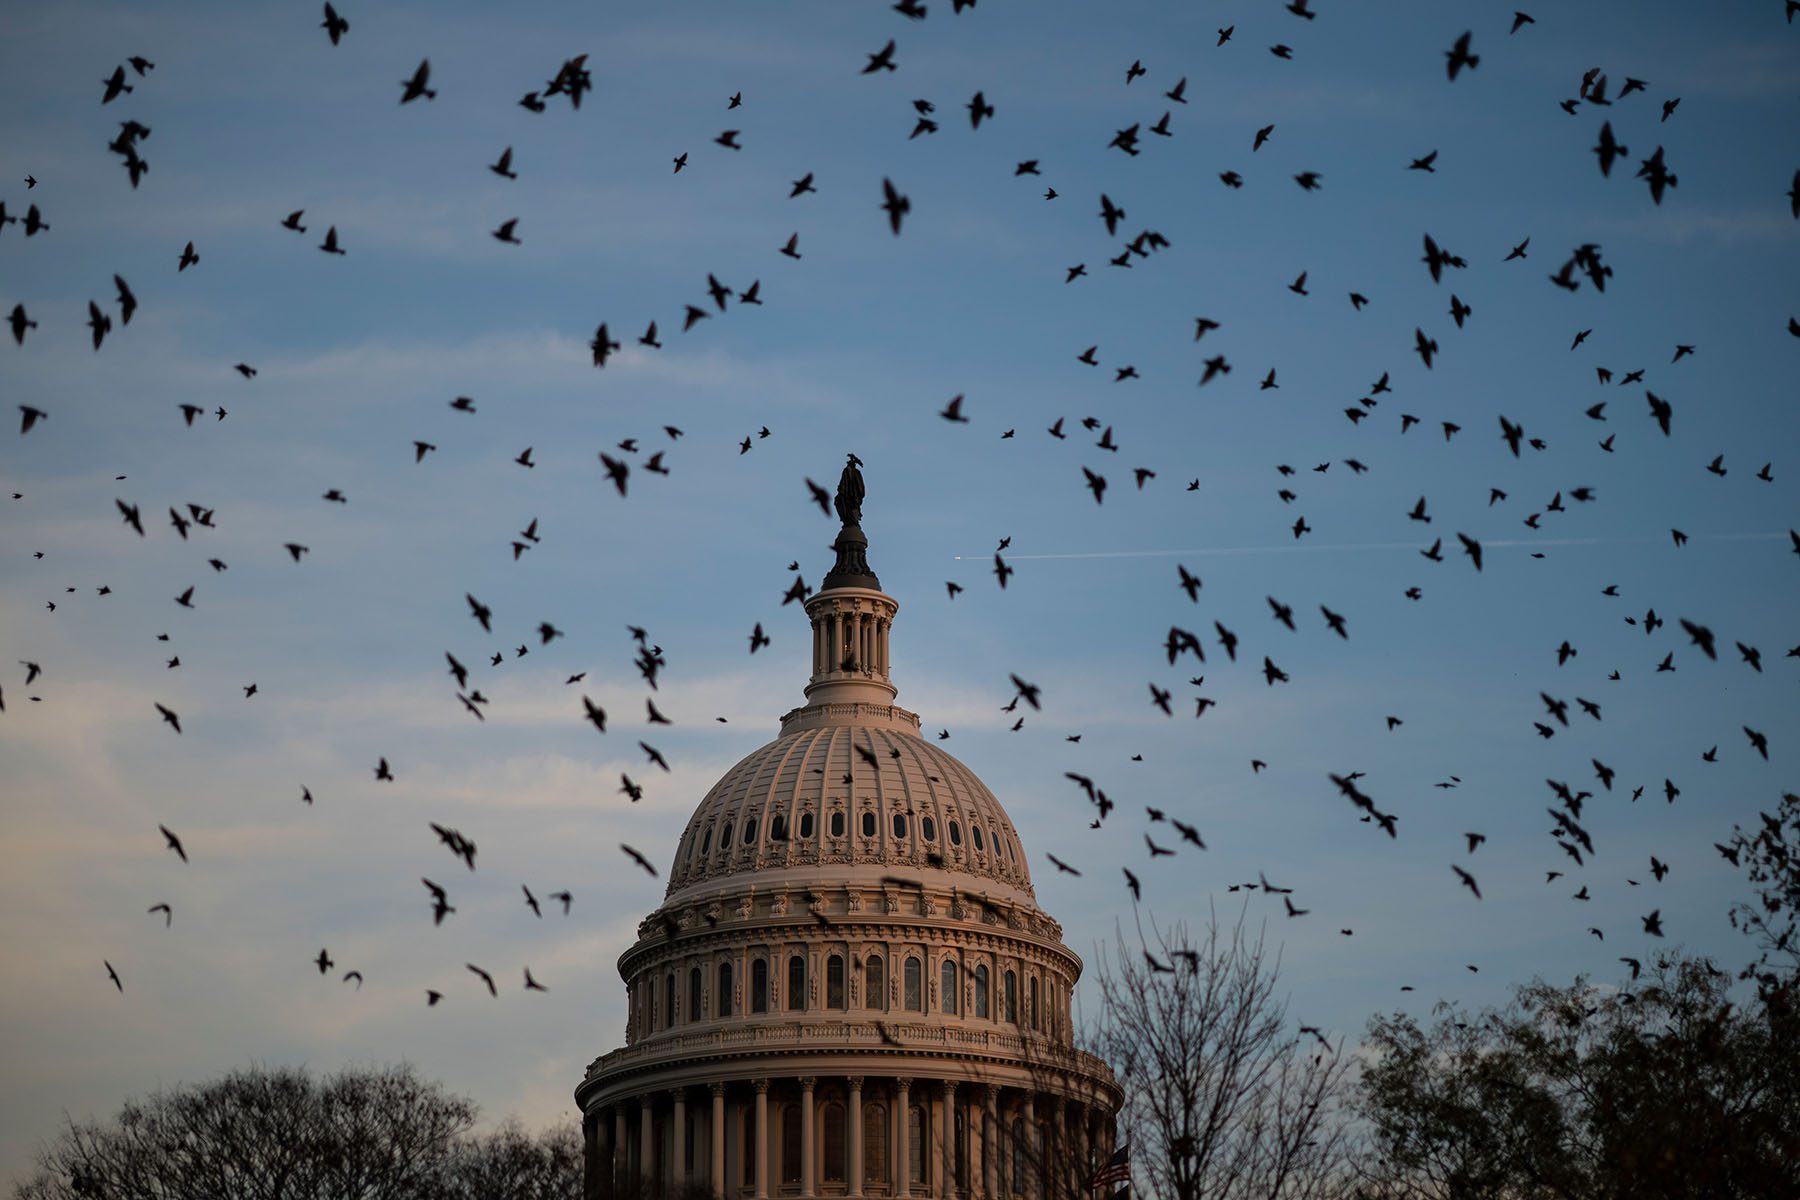 A flock of birds flies near the U.S. Capitol at dusk.